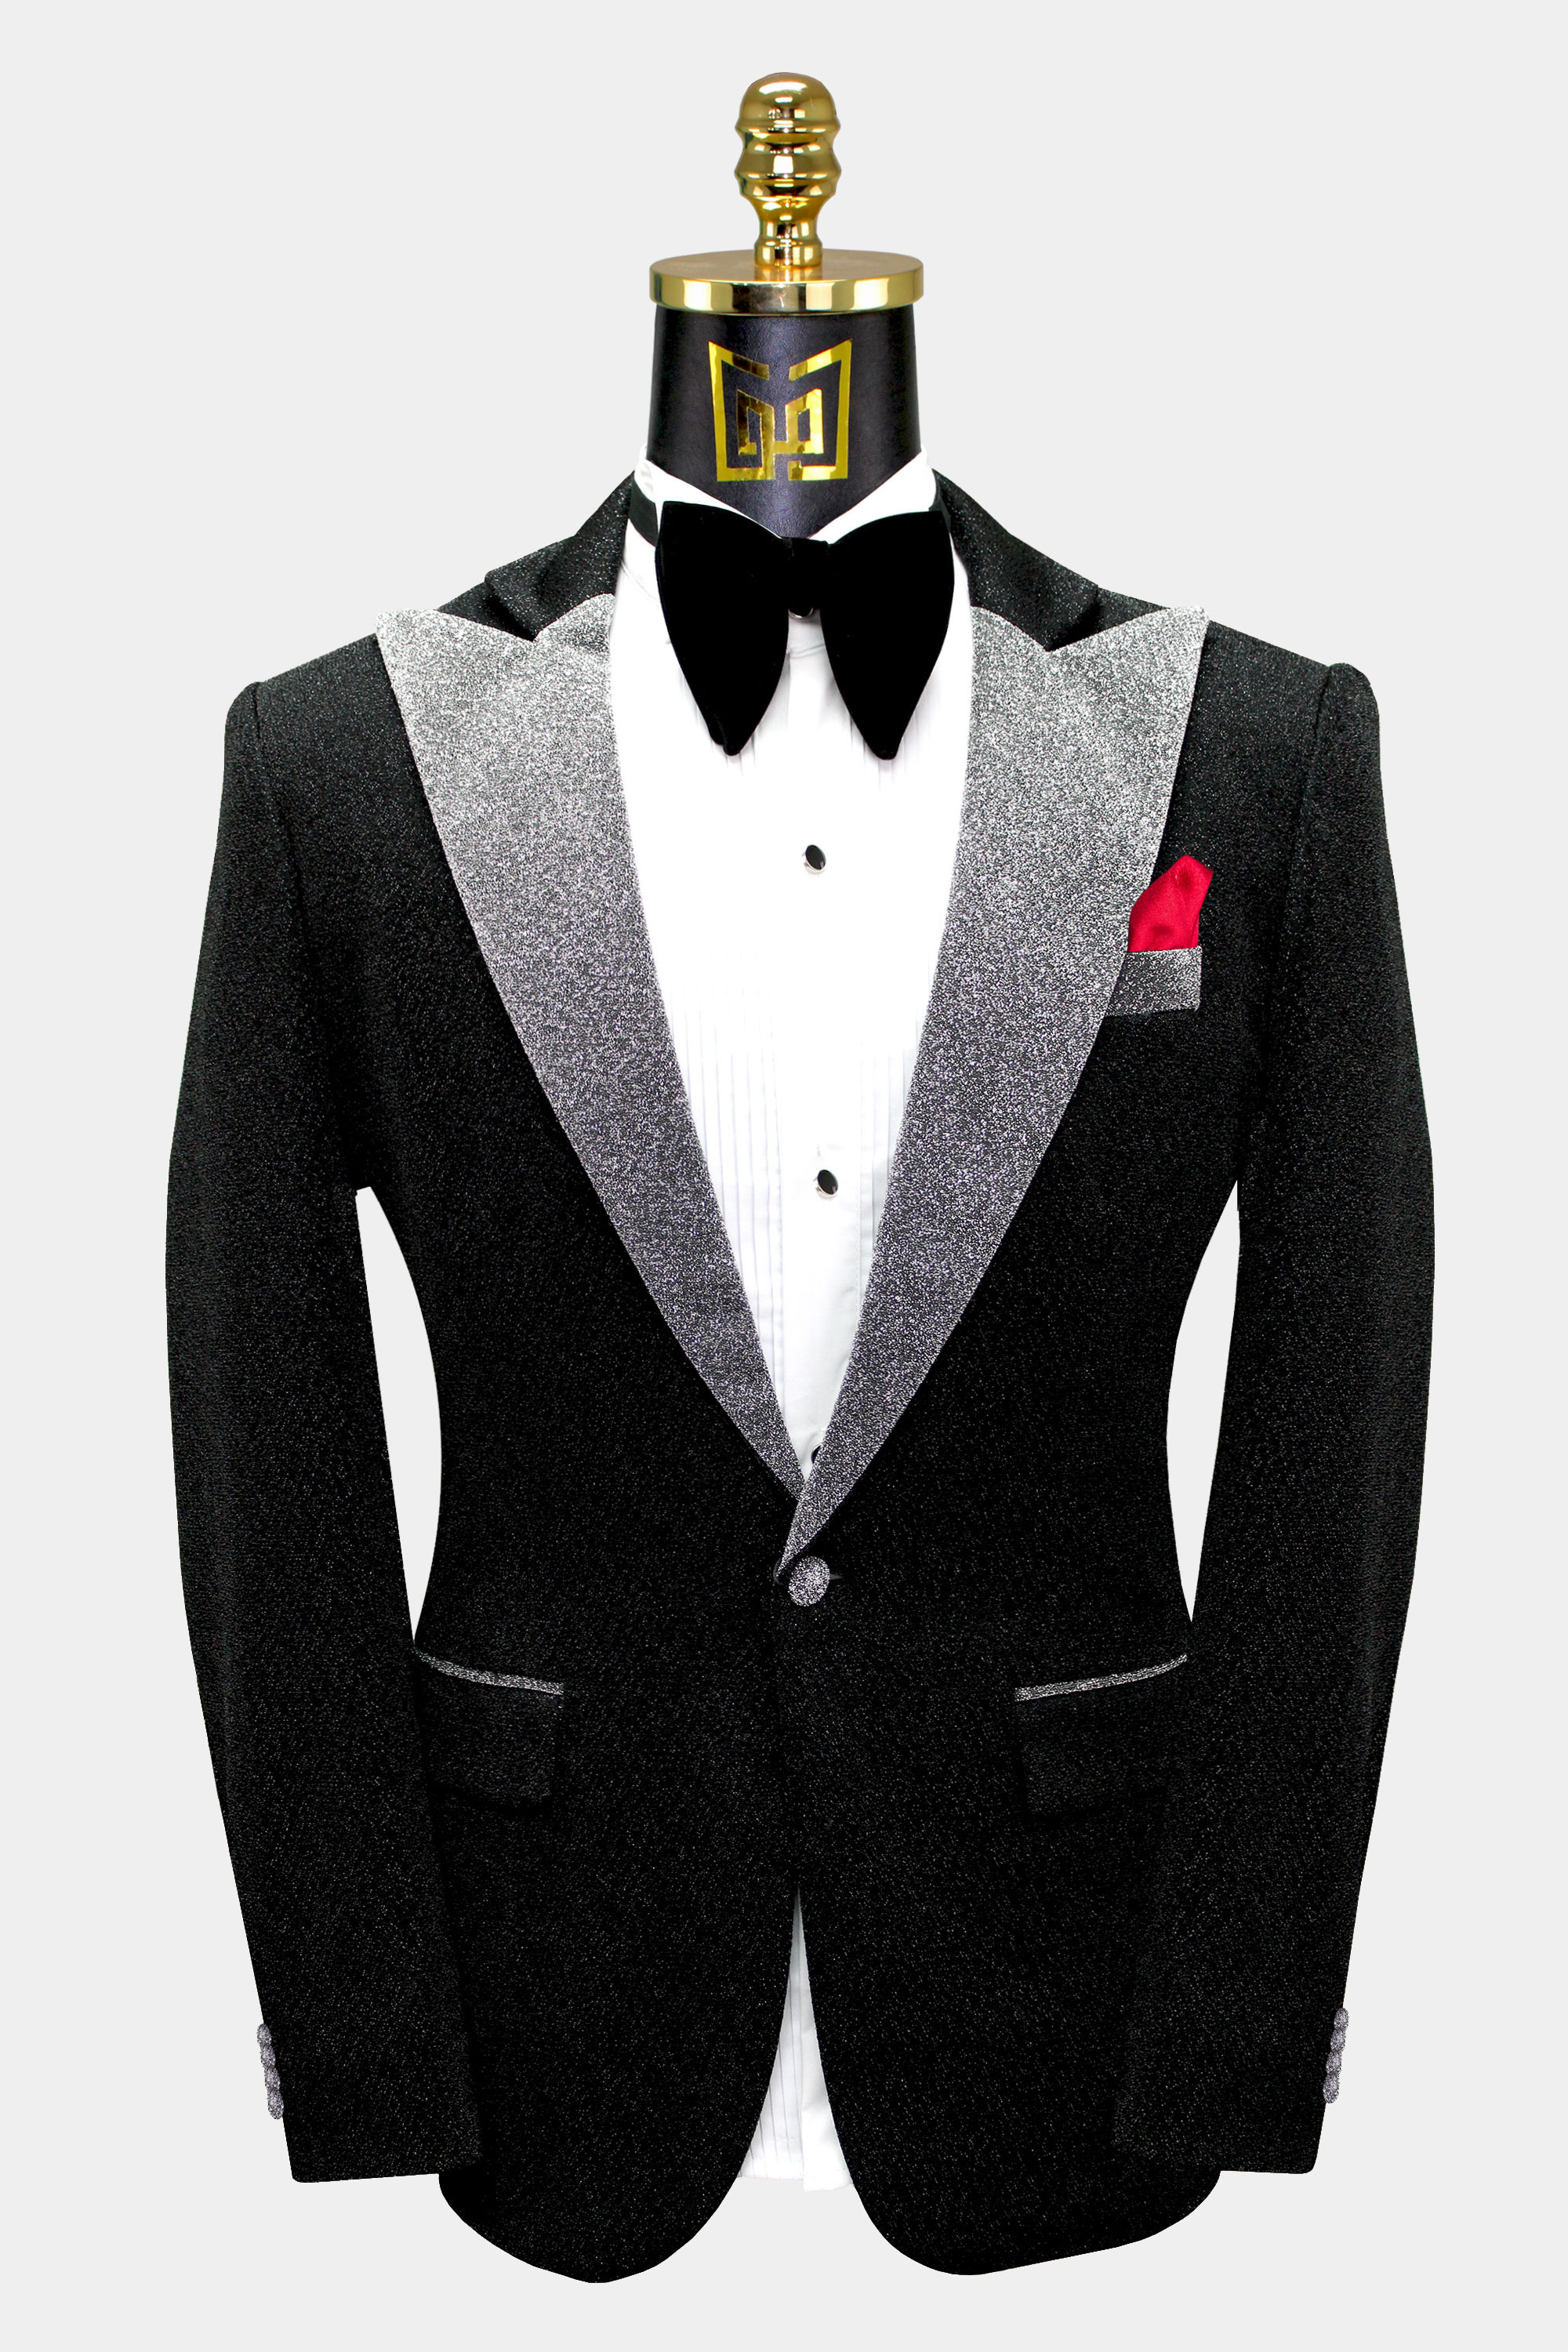 Black-Glitter-Tuxedo-Jacket-Wedding-Groom-Prom-Blazer-Suit-from-Gentlemansguru.com